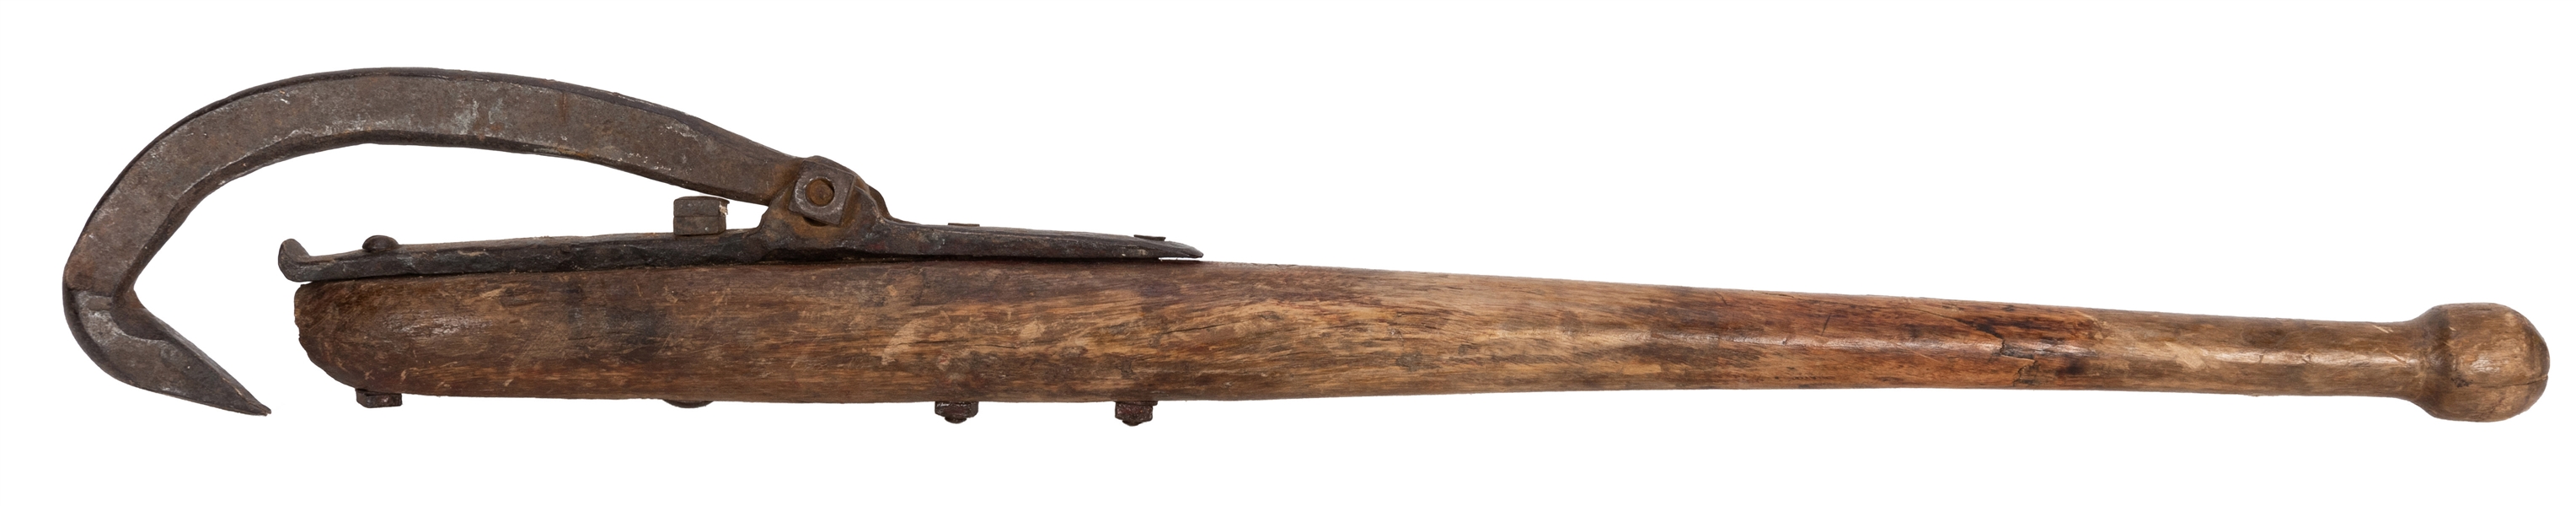 Antique Log Roller with Baseball Bat Handle.